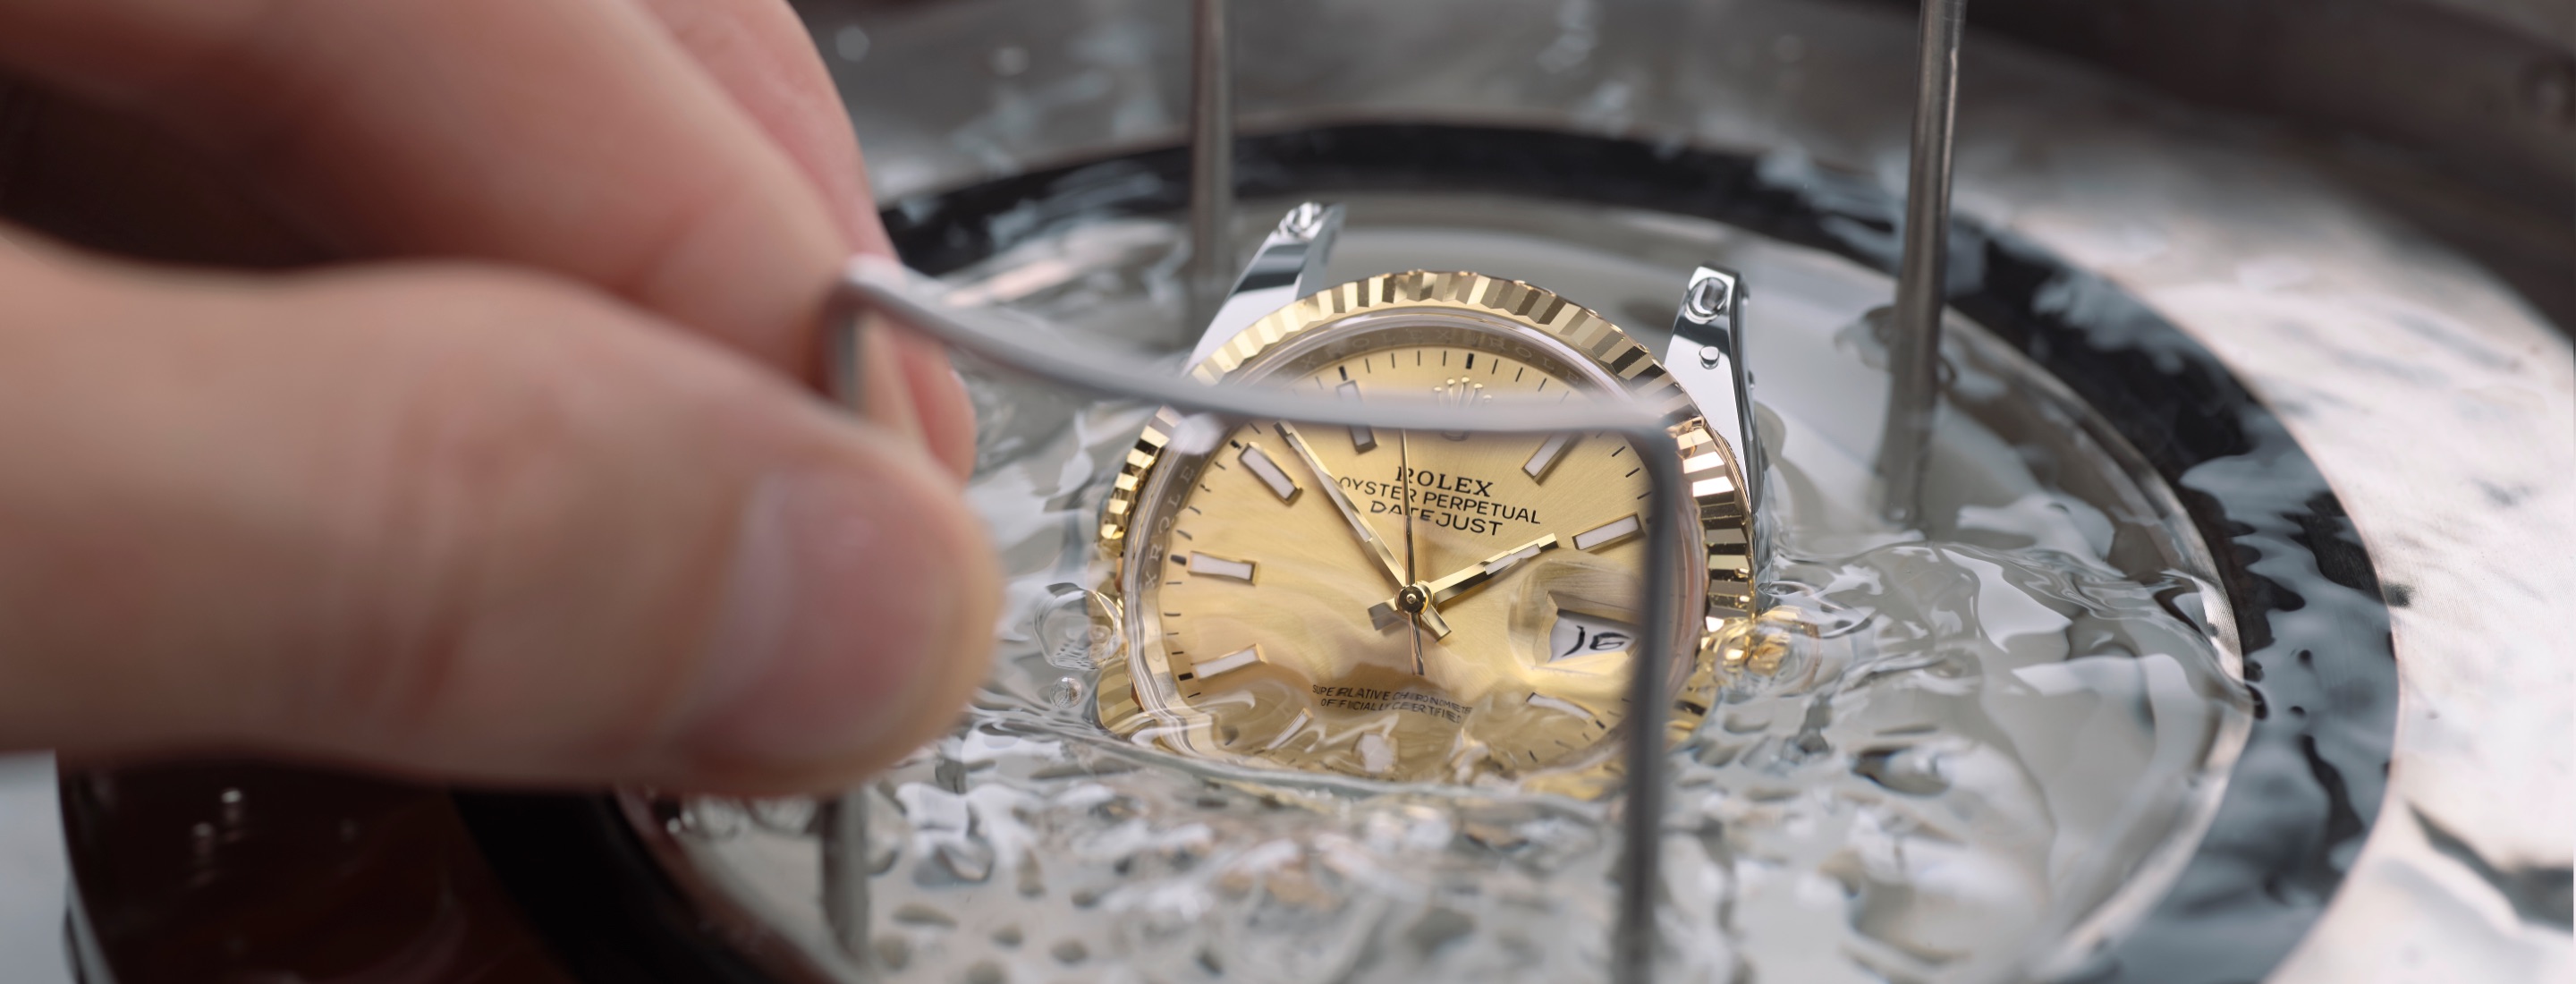 rolex servicing - Oriental Watch Company